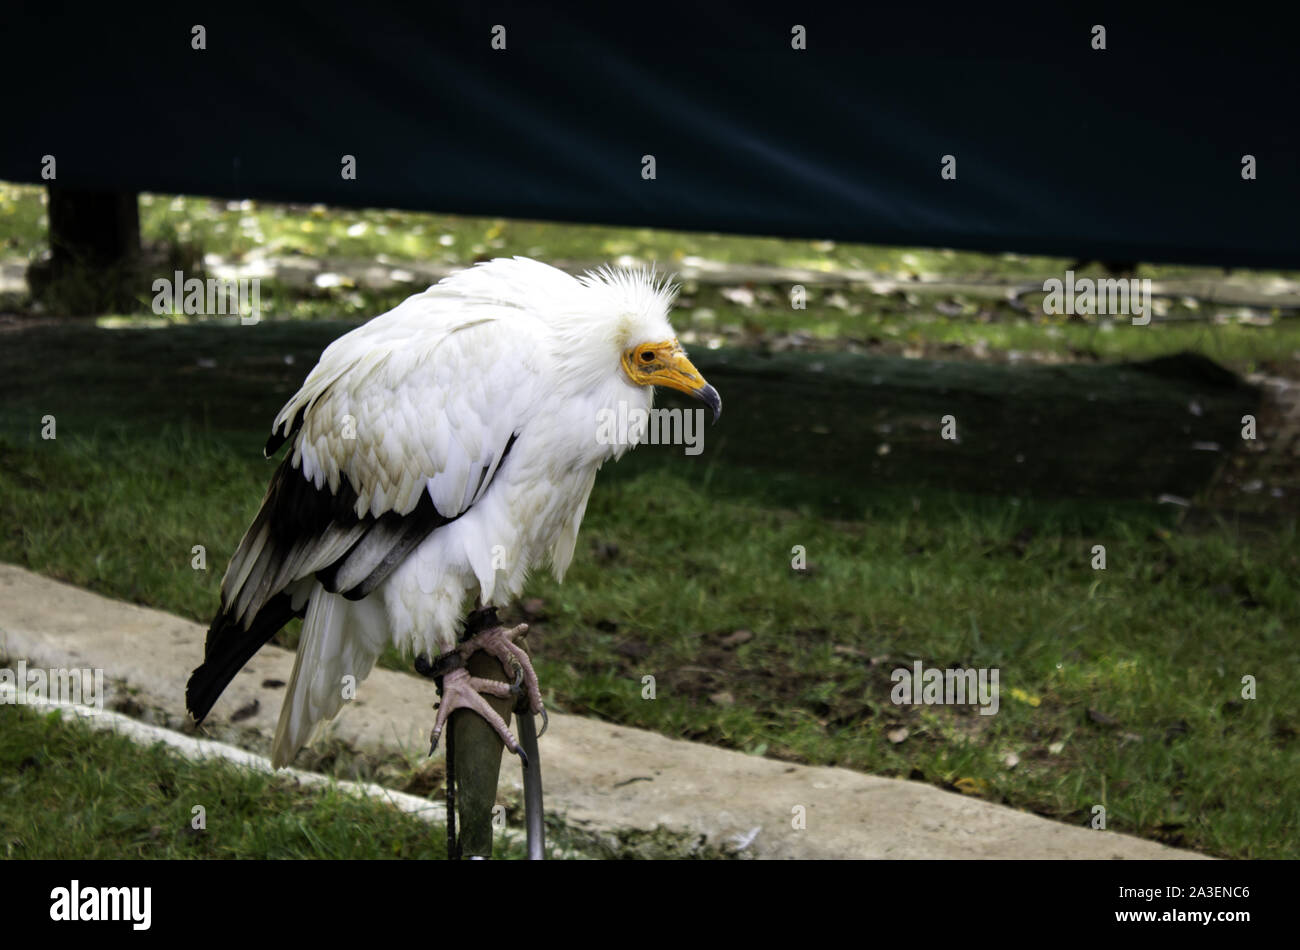 Wild vulture in captivity, mammal animals, birds Stock Photo